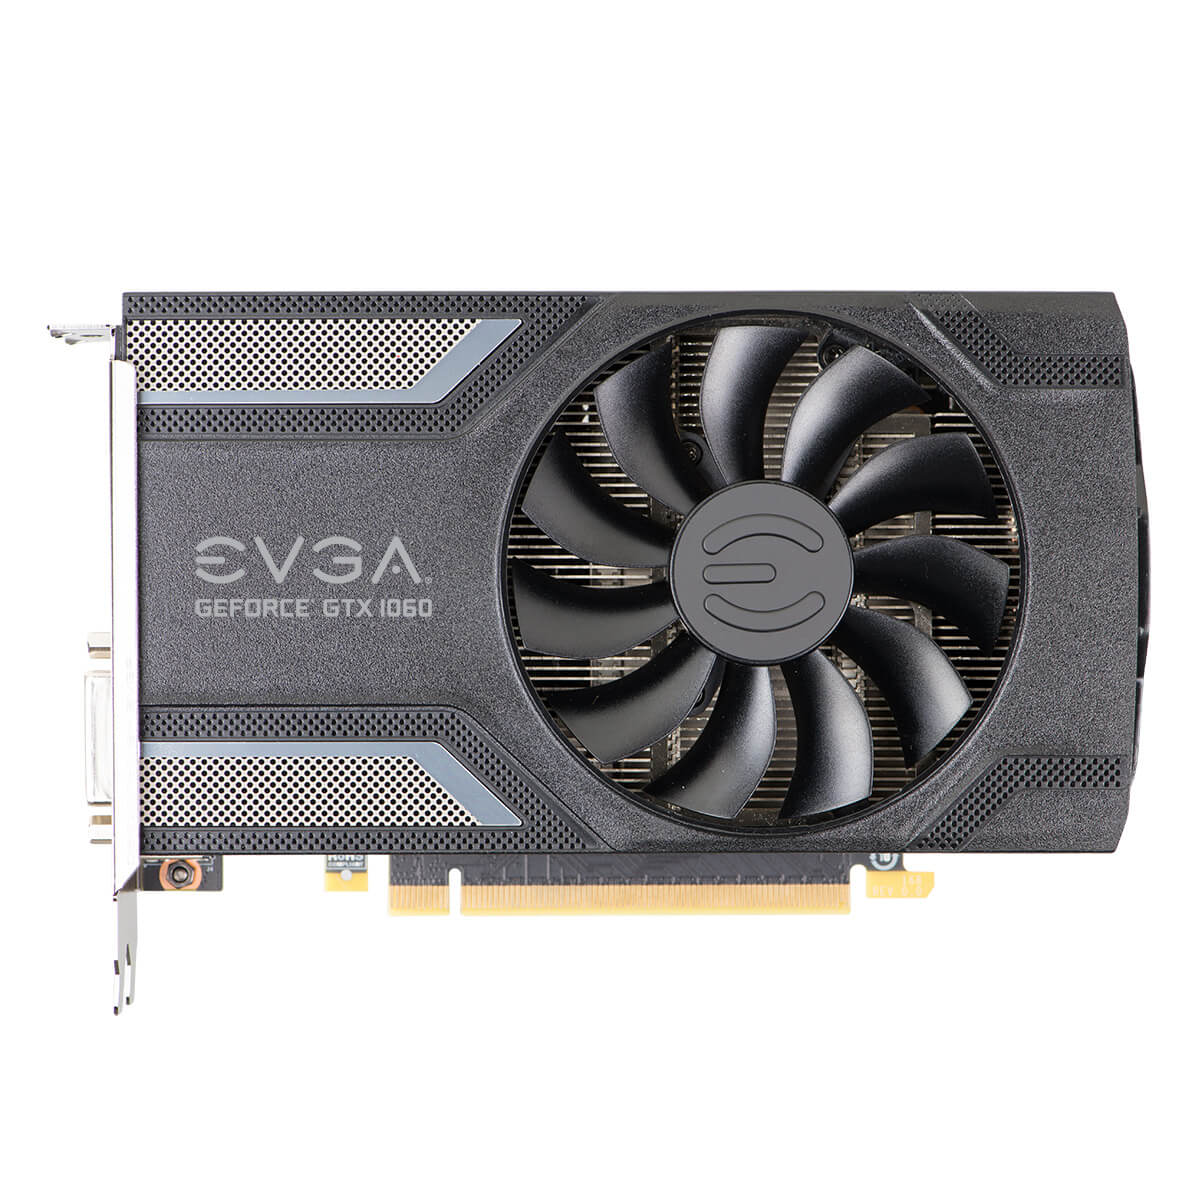 EVGA - Articles - GeForce GTX 1060